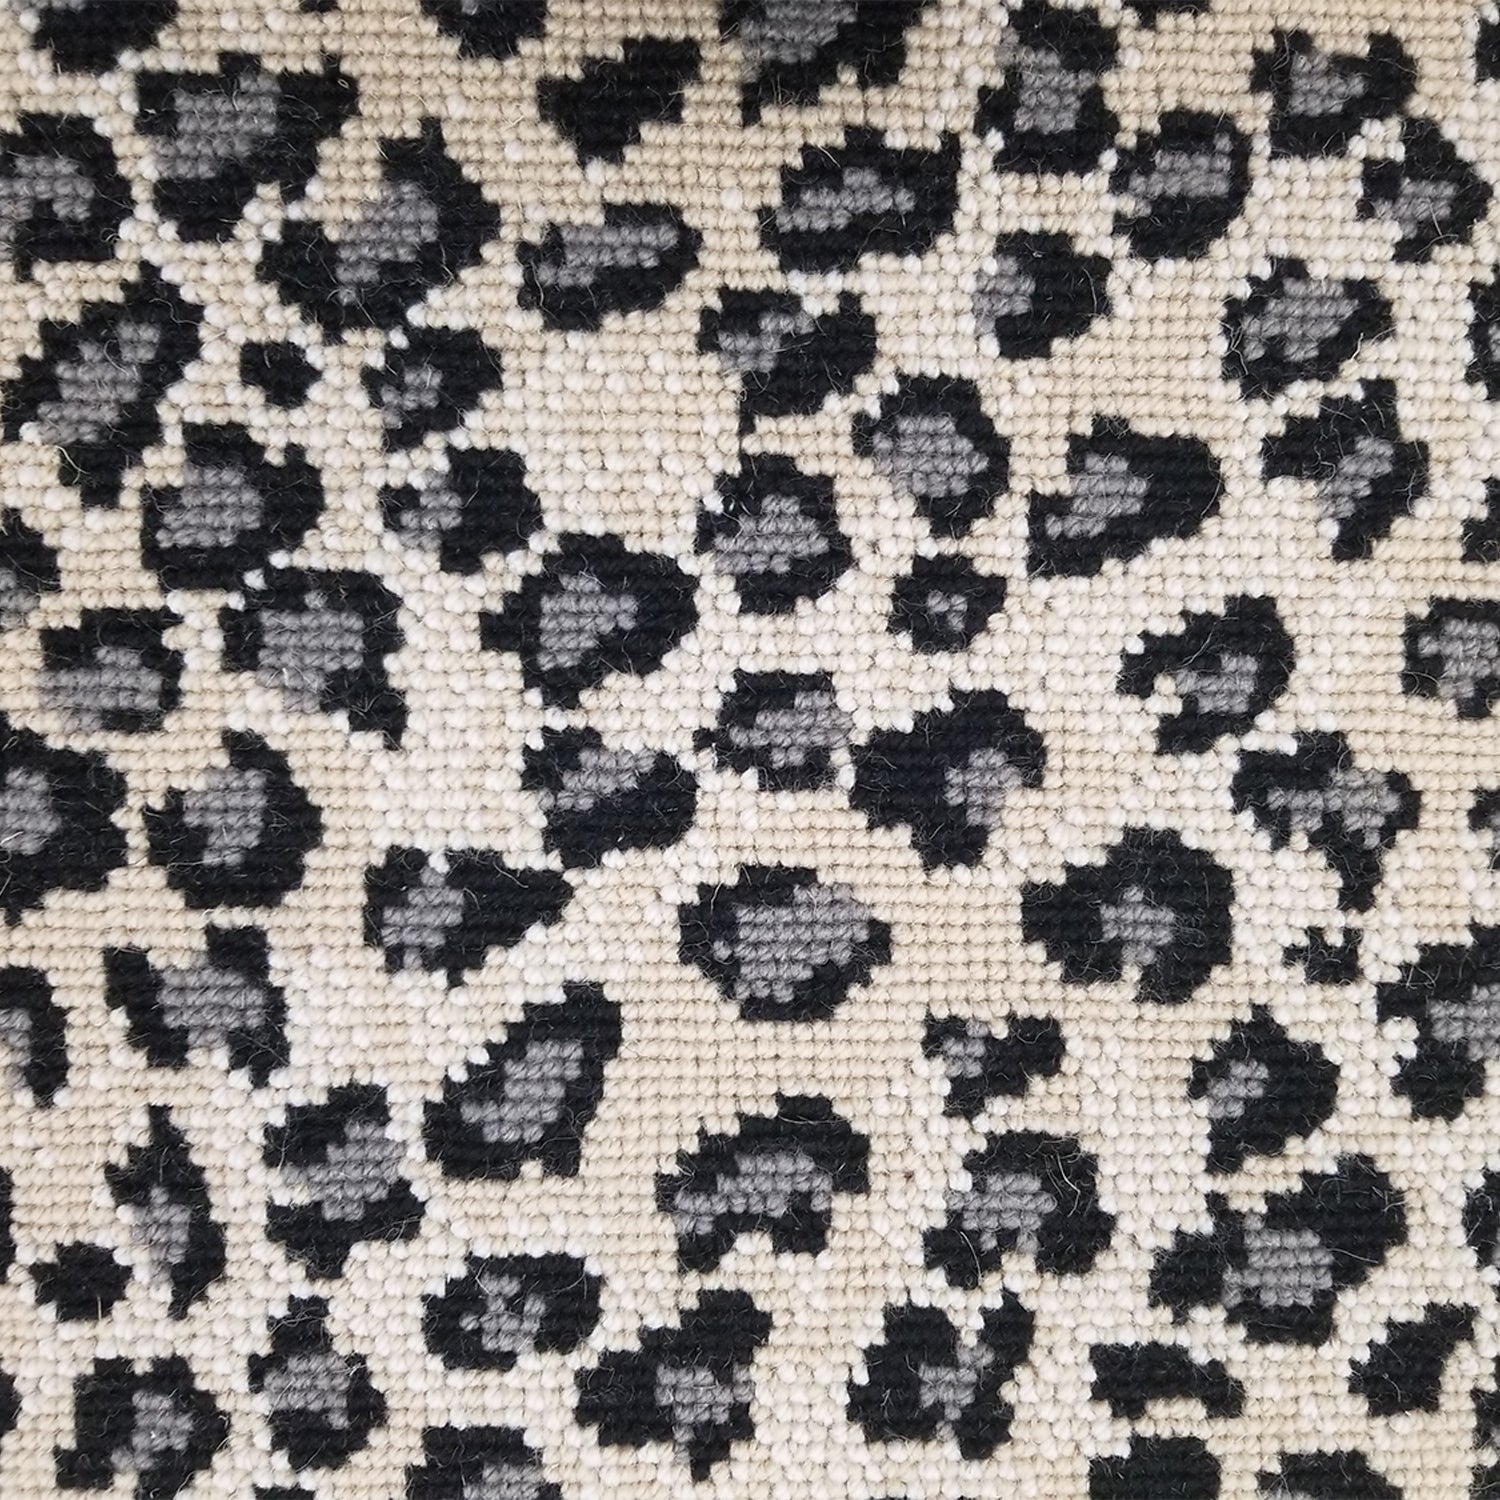 Wool broadloom carpet swatch in a leopard print in gray and black on a mottled cream field.